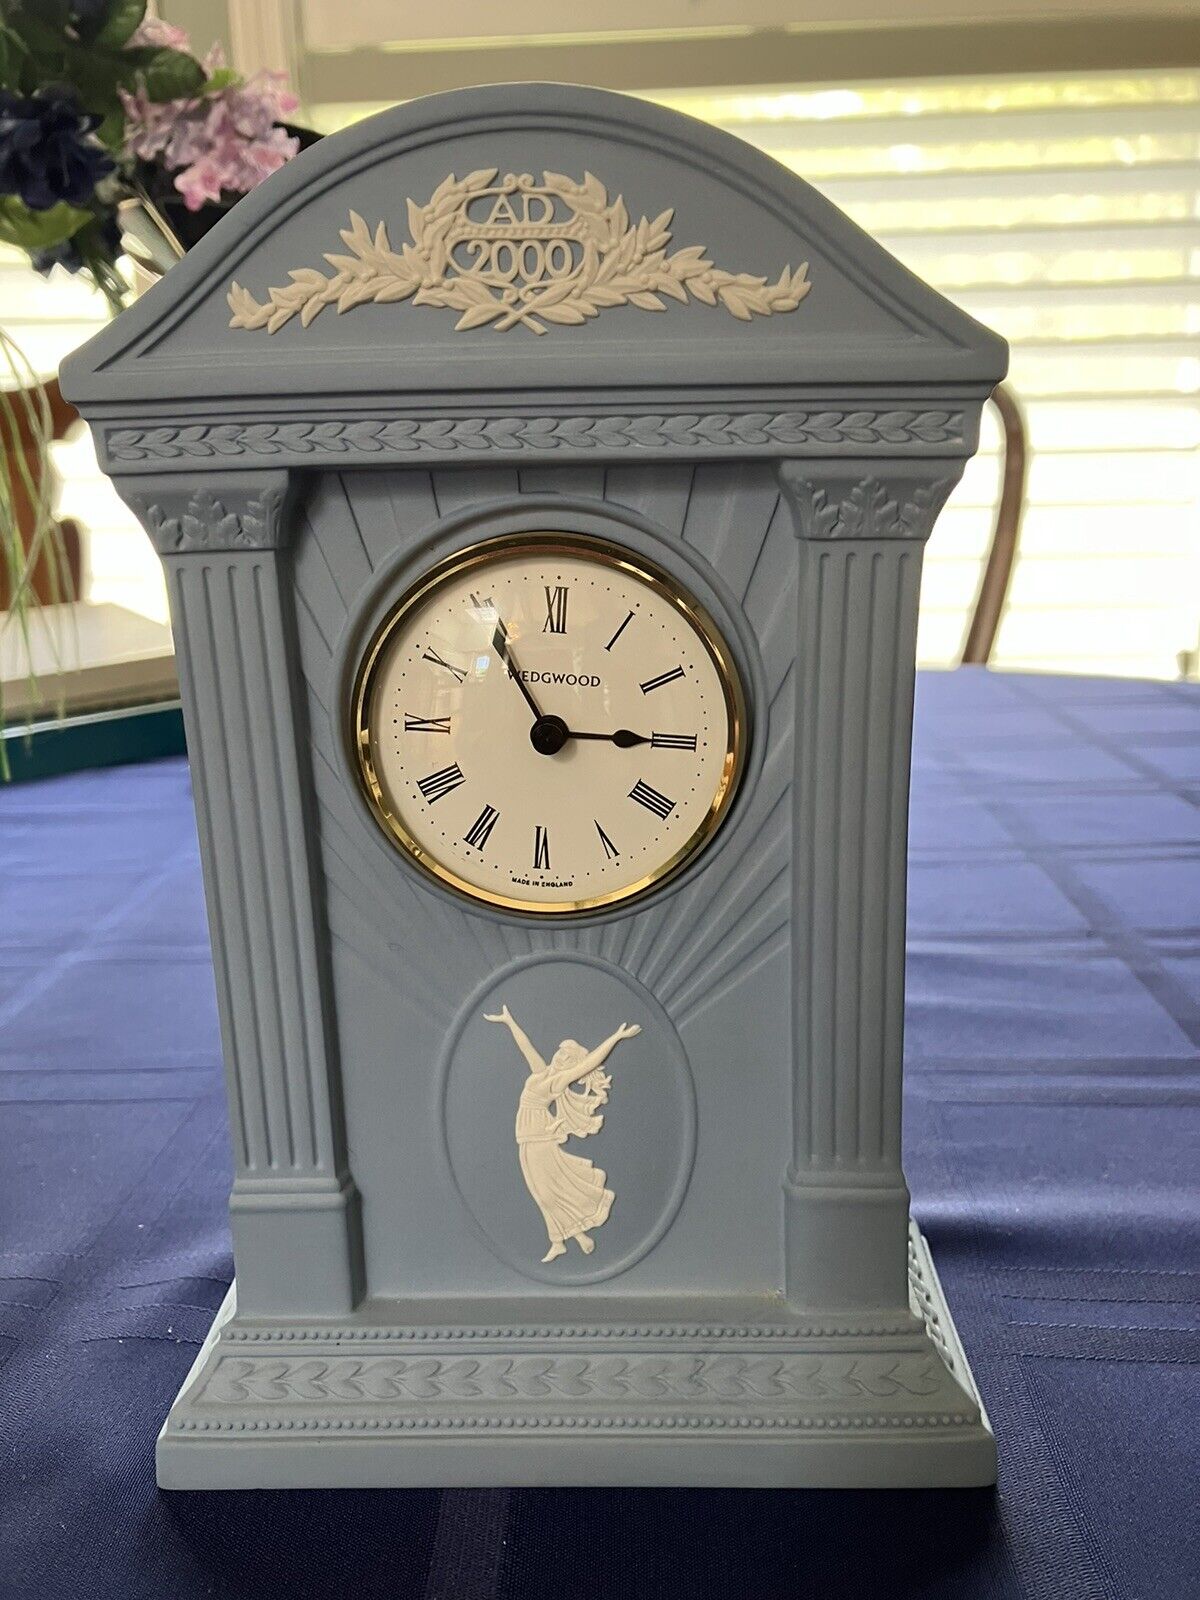 Wedgwood Blue Jasperware Millennium Mantle Clock 2000